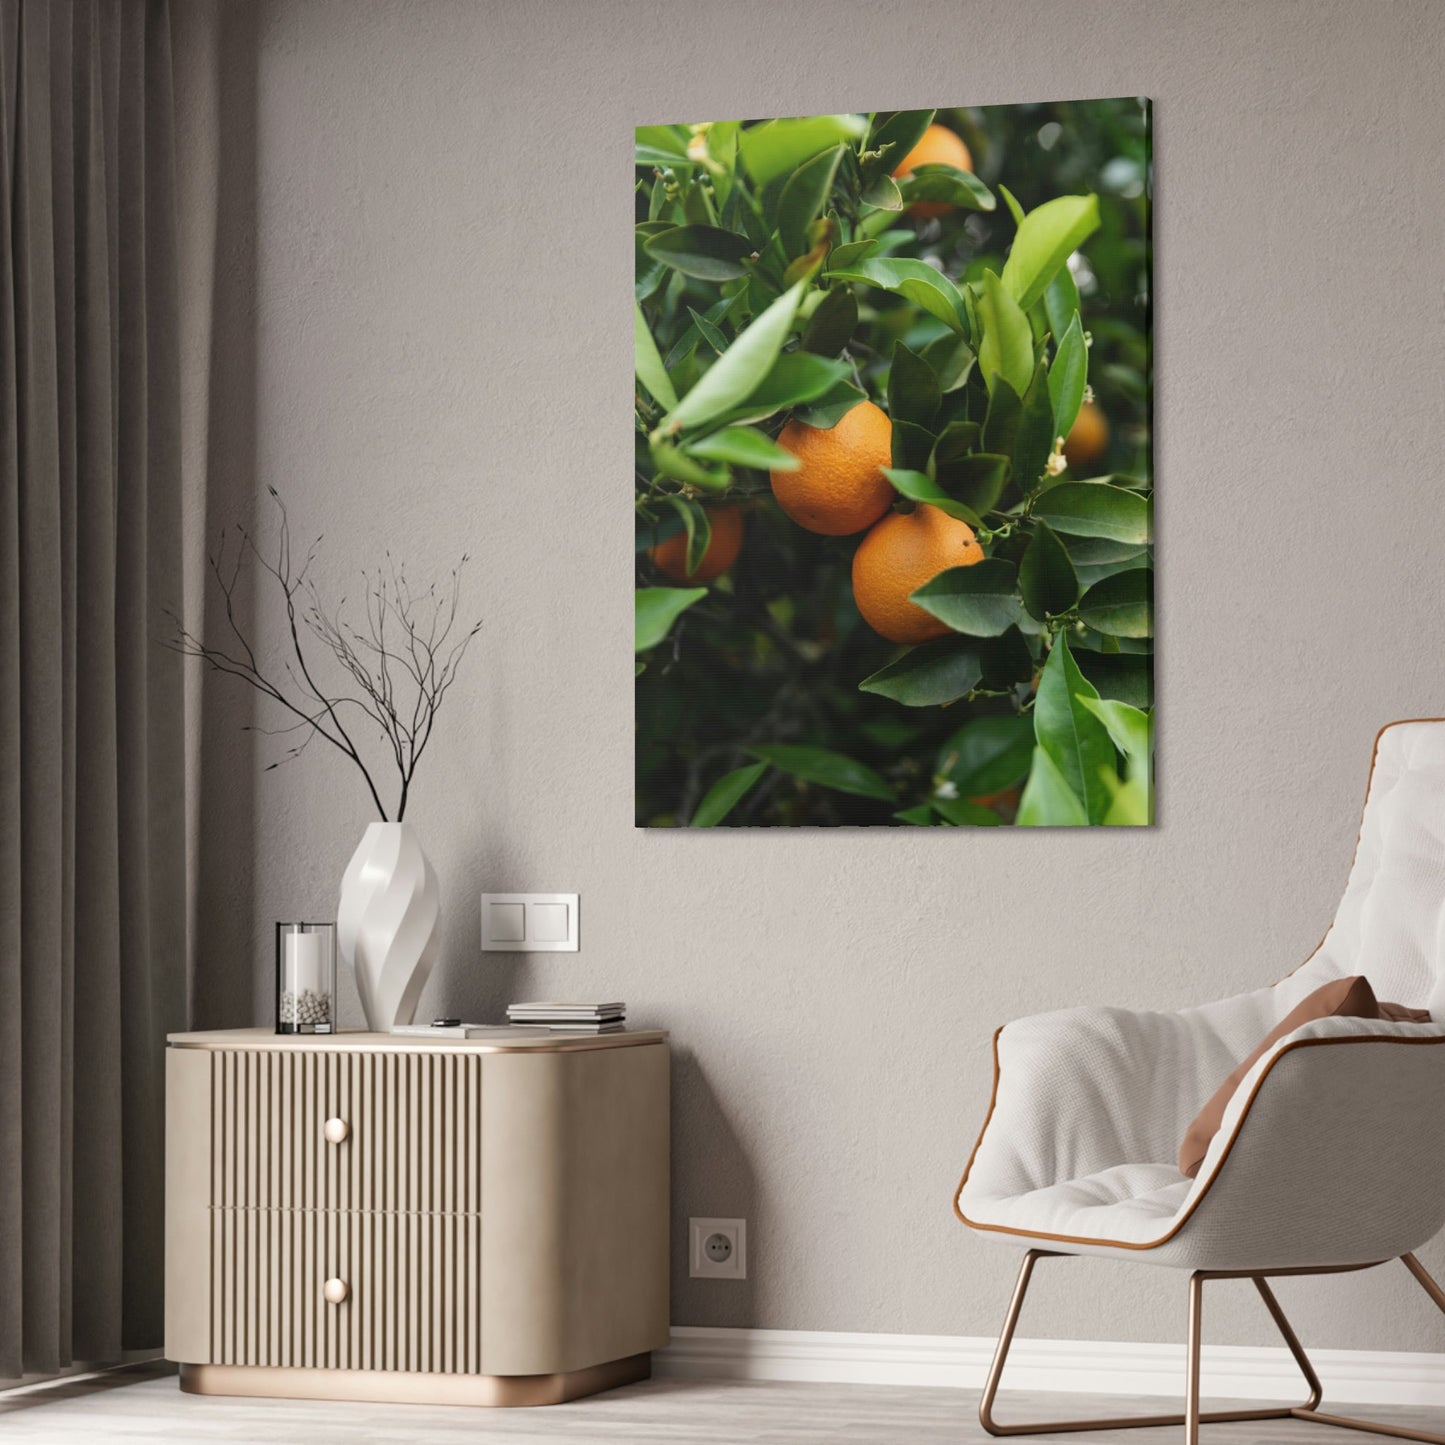 Vivid Orchard: Fruit Trees Canvas Wall Decor